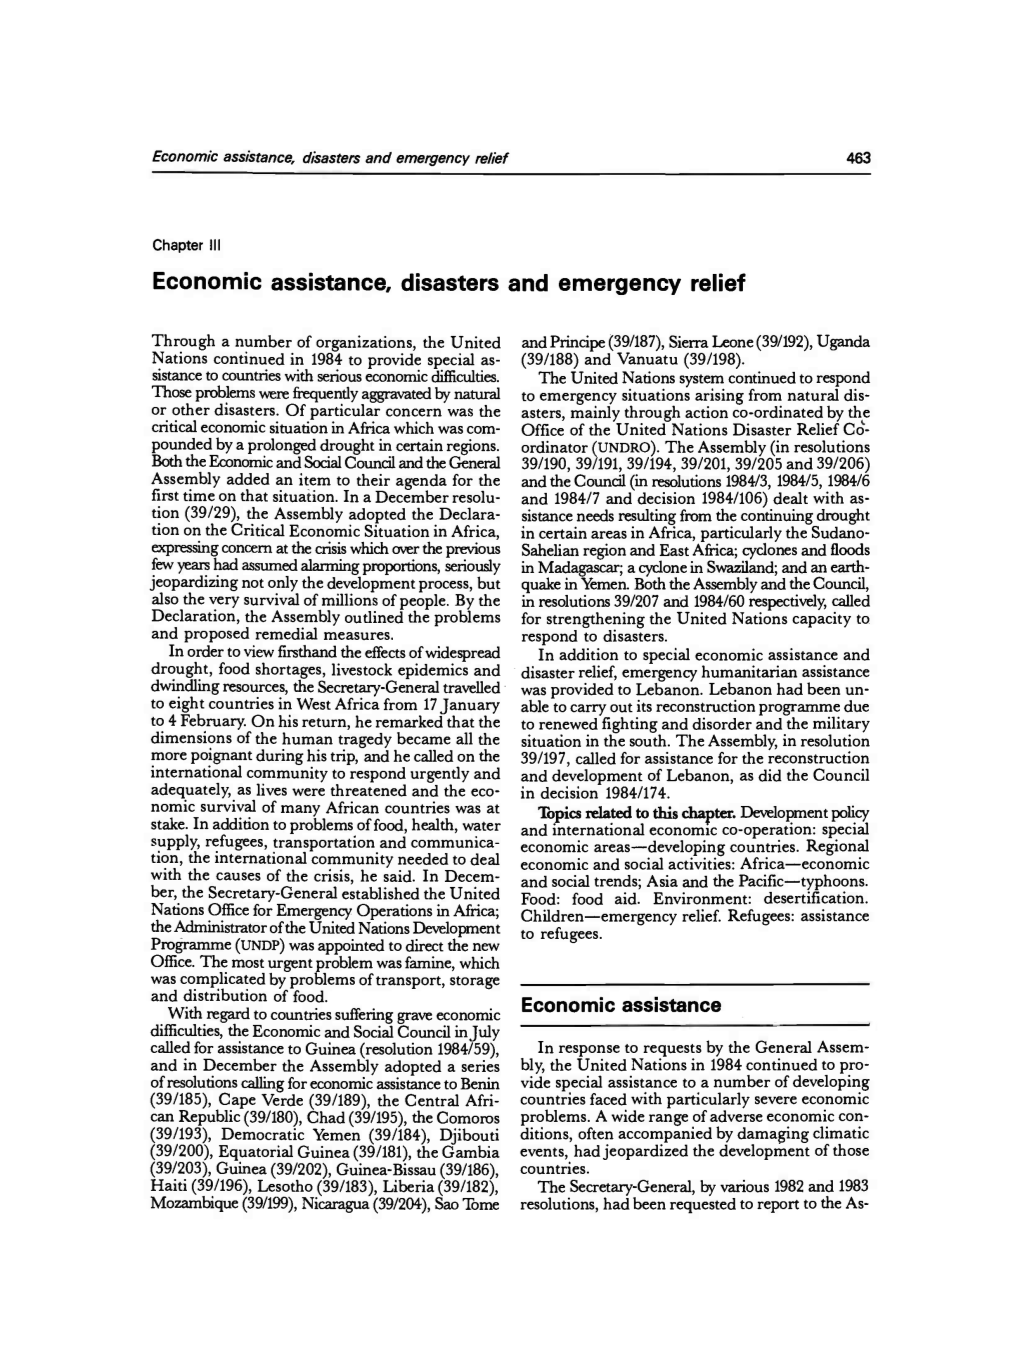 [ 1984 ] Part 1 Sec 2 Chapter 3 Economic Assistance, Disasters